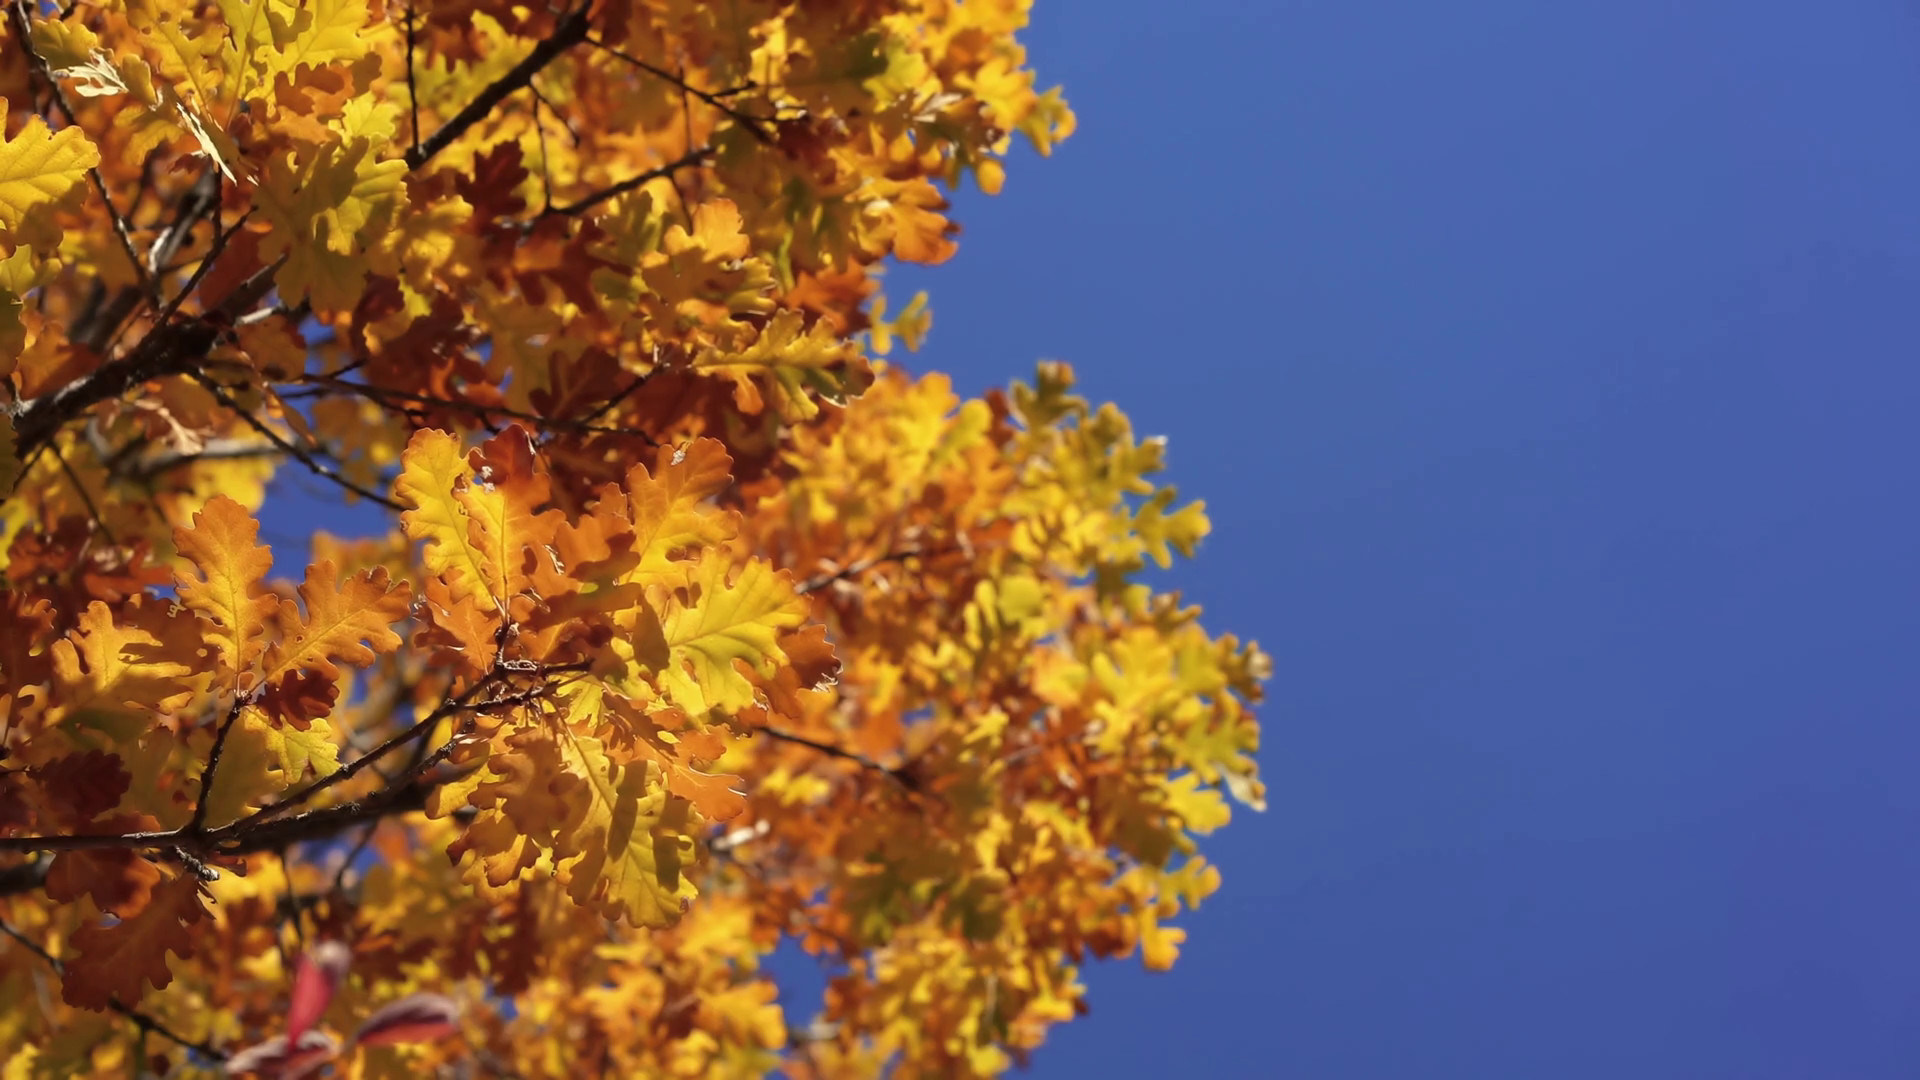 1920x1080 Sun shining through yellow oak tree leaves. Blue sky on the background. Beautiful  autumn